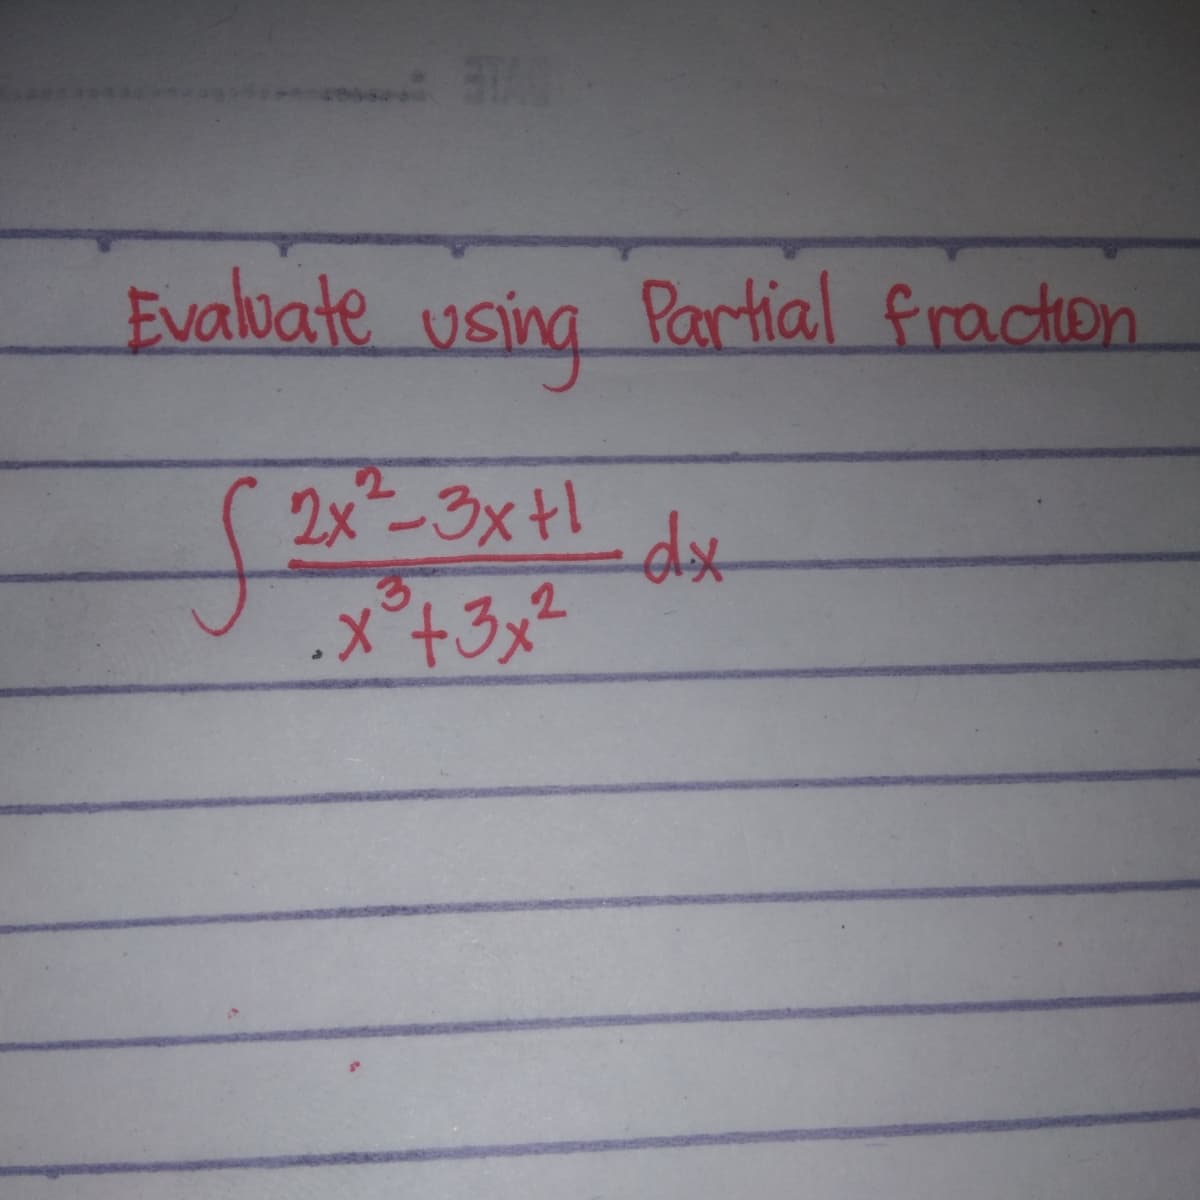 Evalvate using Partial fraction
2.
2x-3x+l
.x°+3x²
